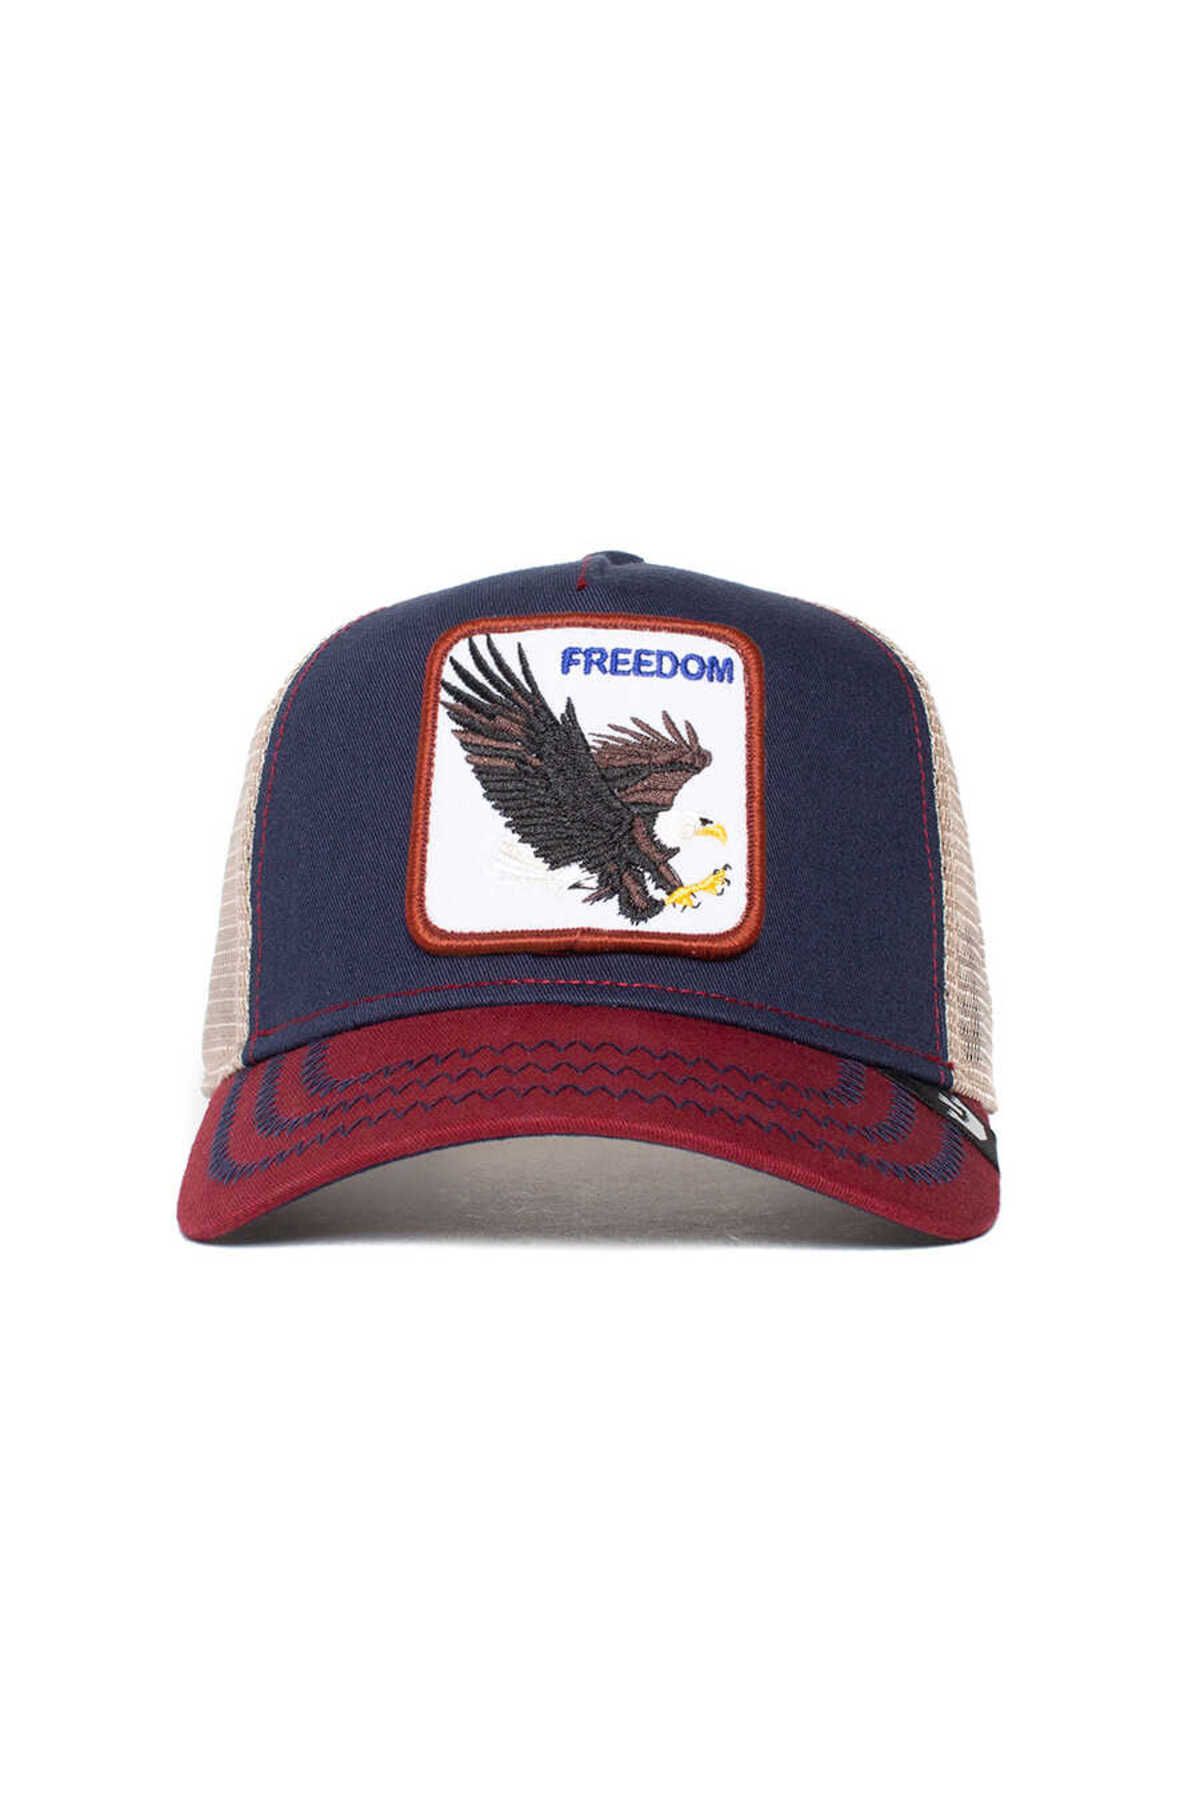 Goorin Bros The Freedom Eagle  Kartal Figür Şapka 101-0384 Lacivert Standart